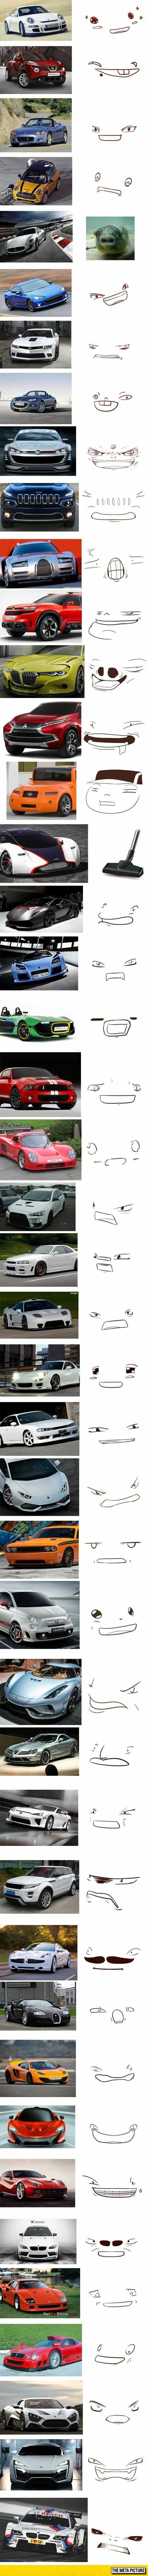 Car faces